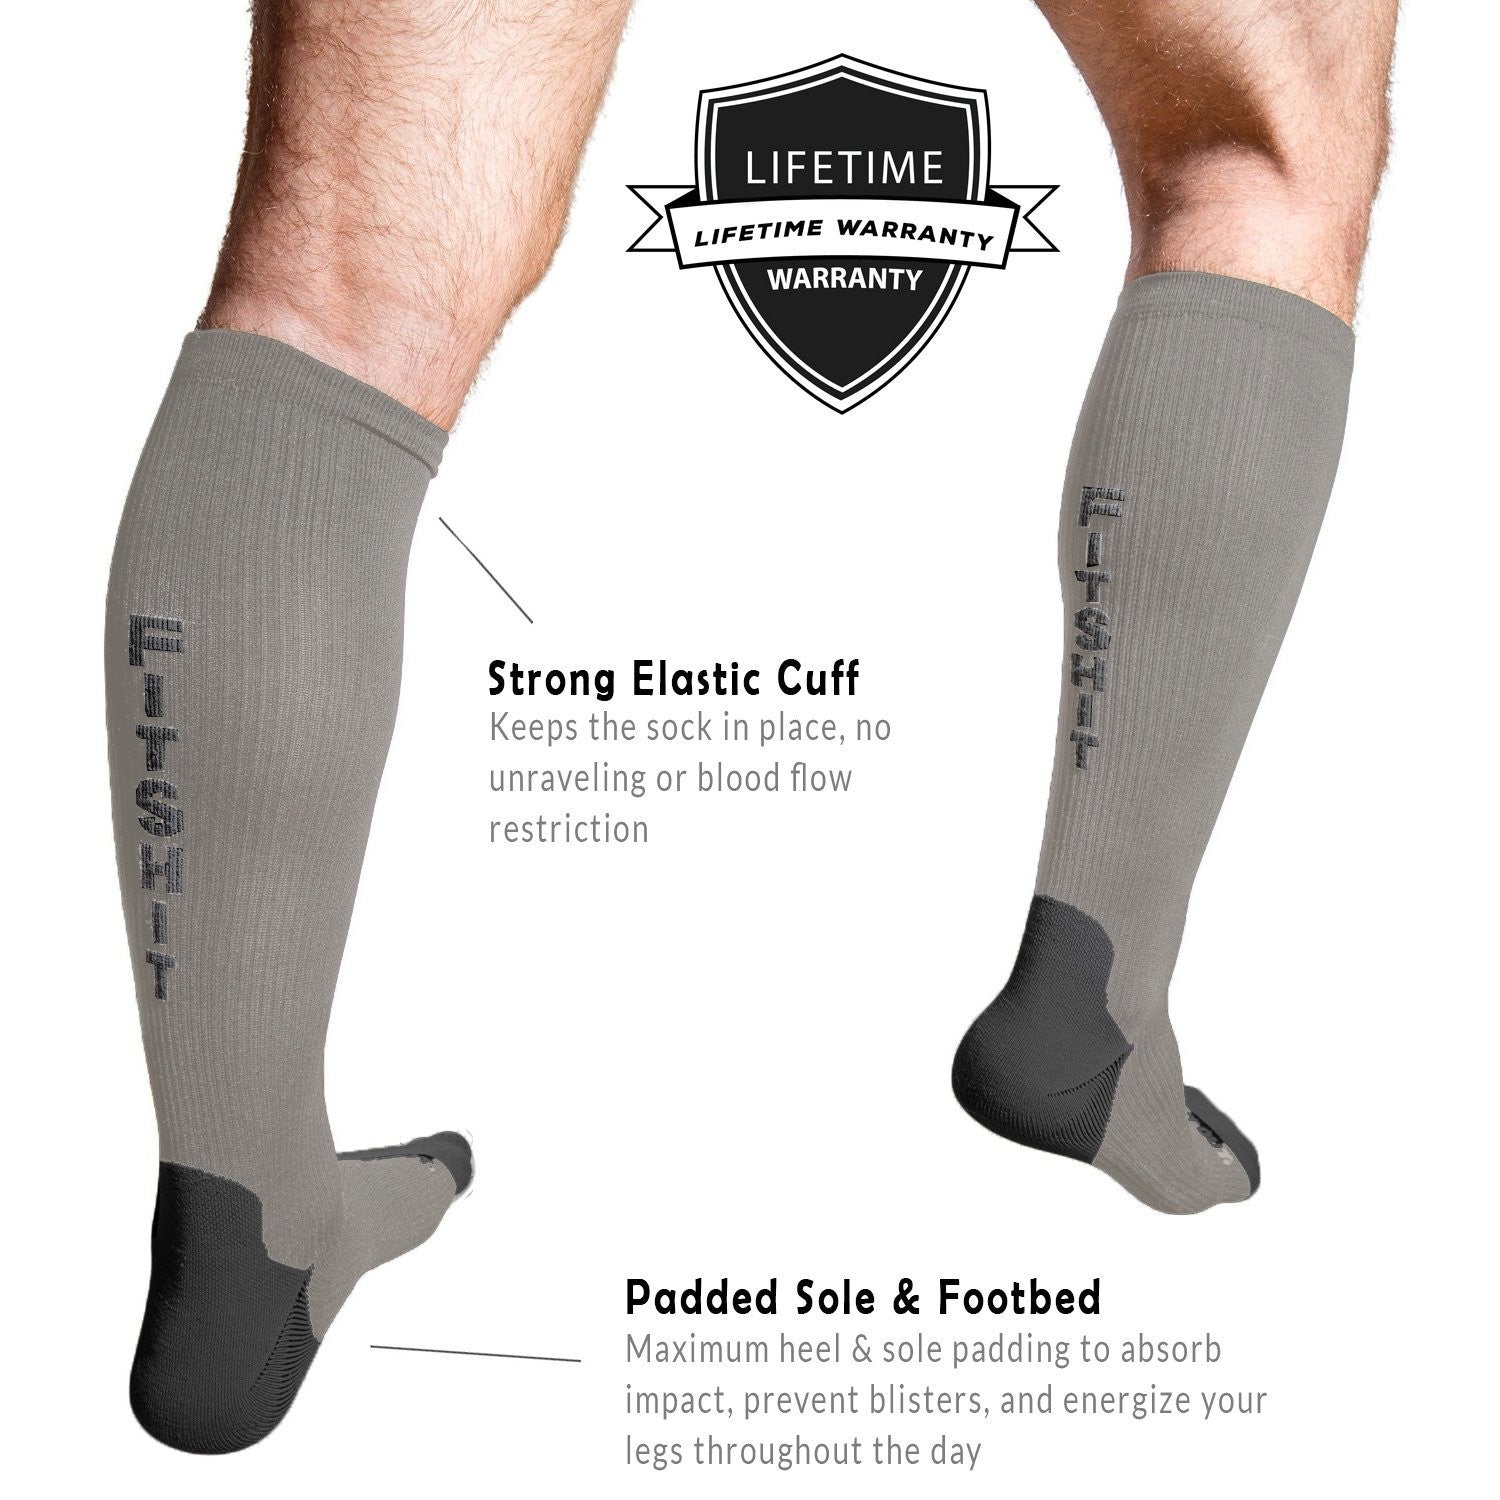 Run+ Elite Reflective - Atheltic Grade Compression Socks – Extreme Fit